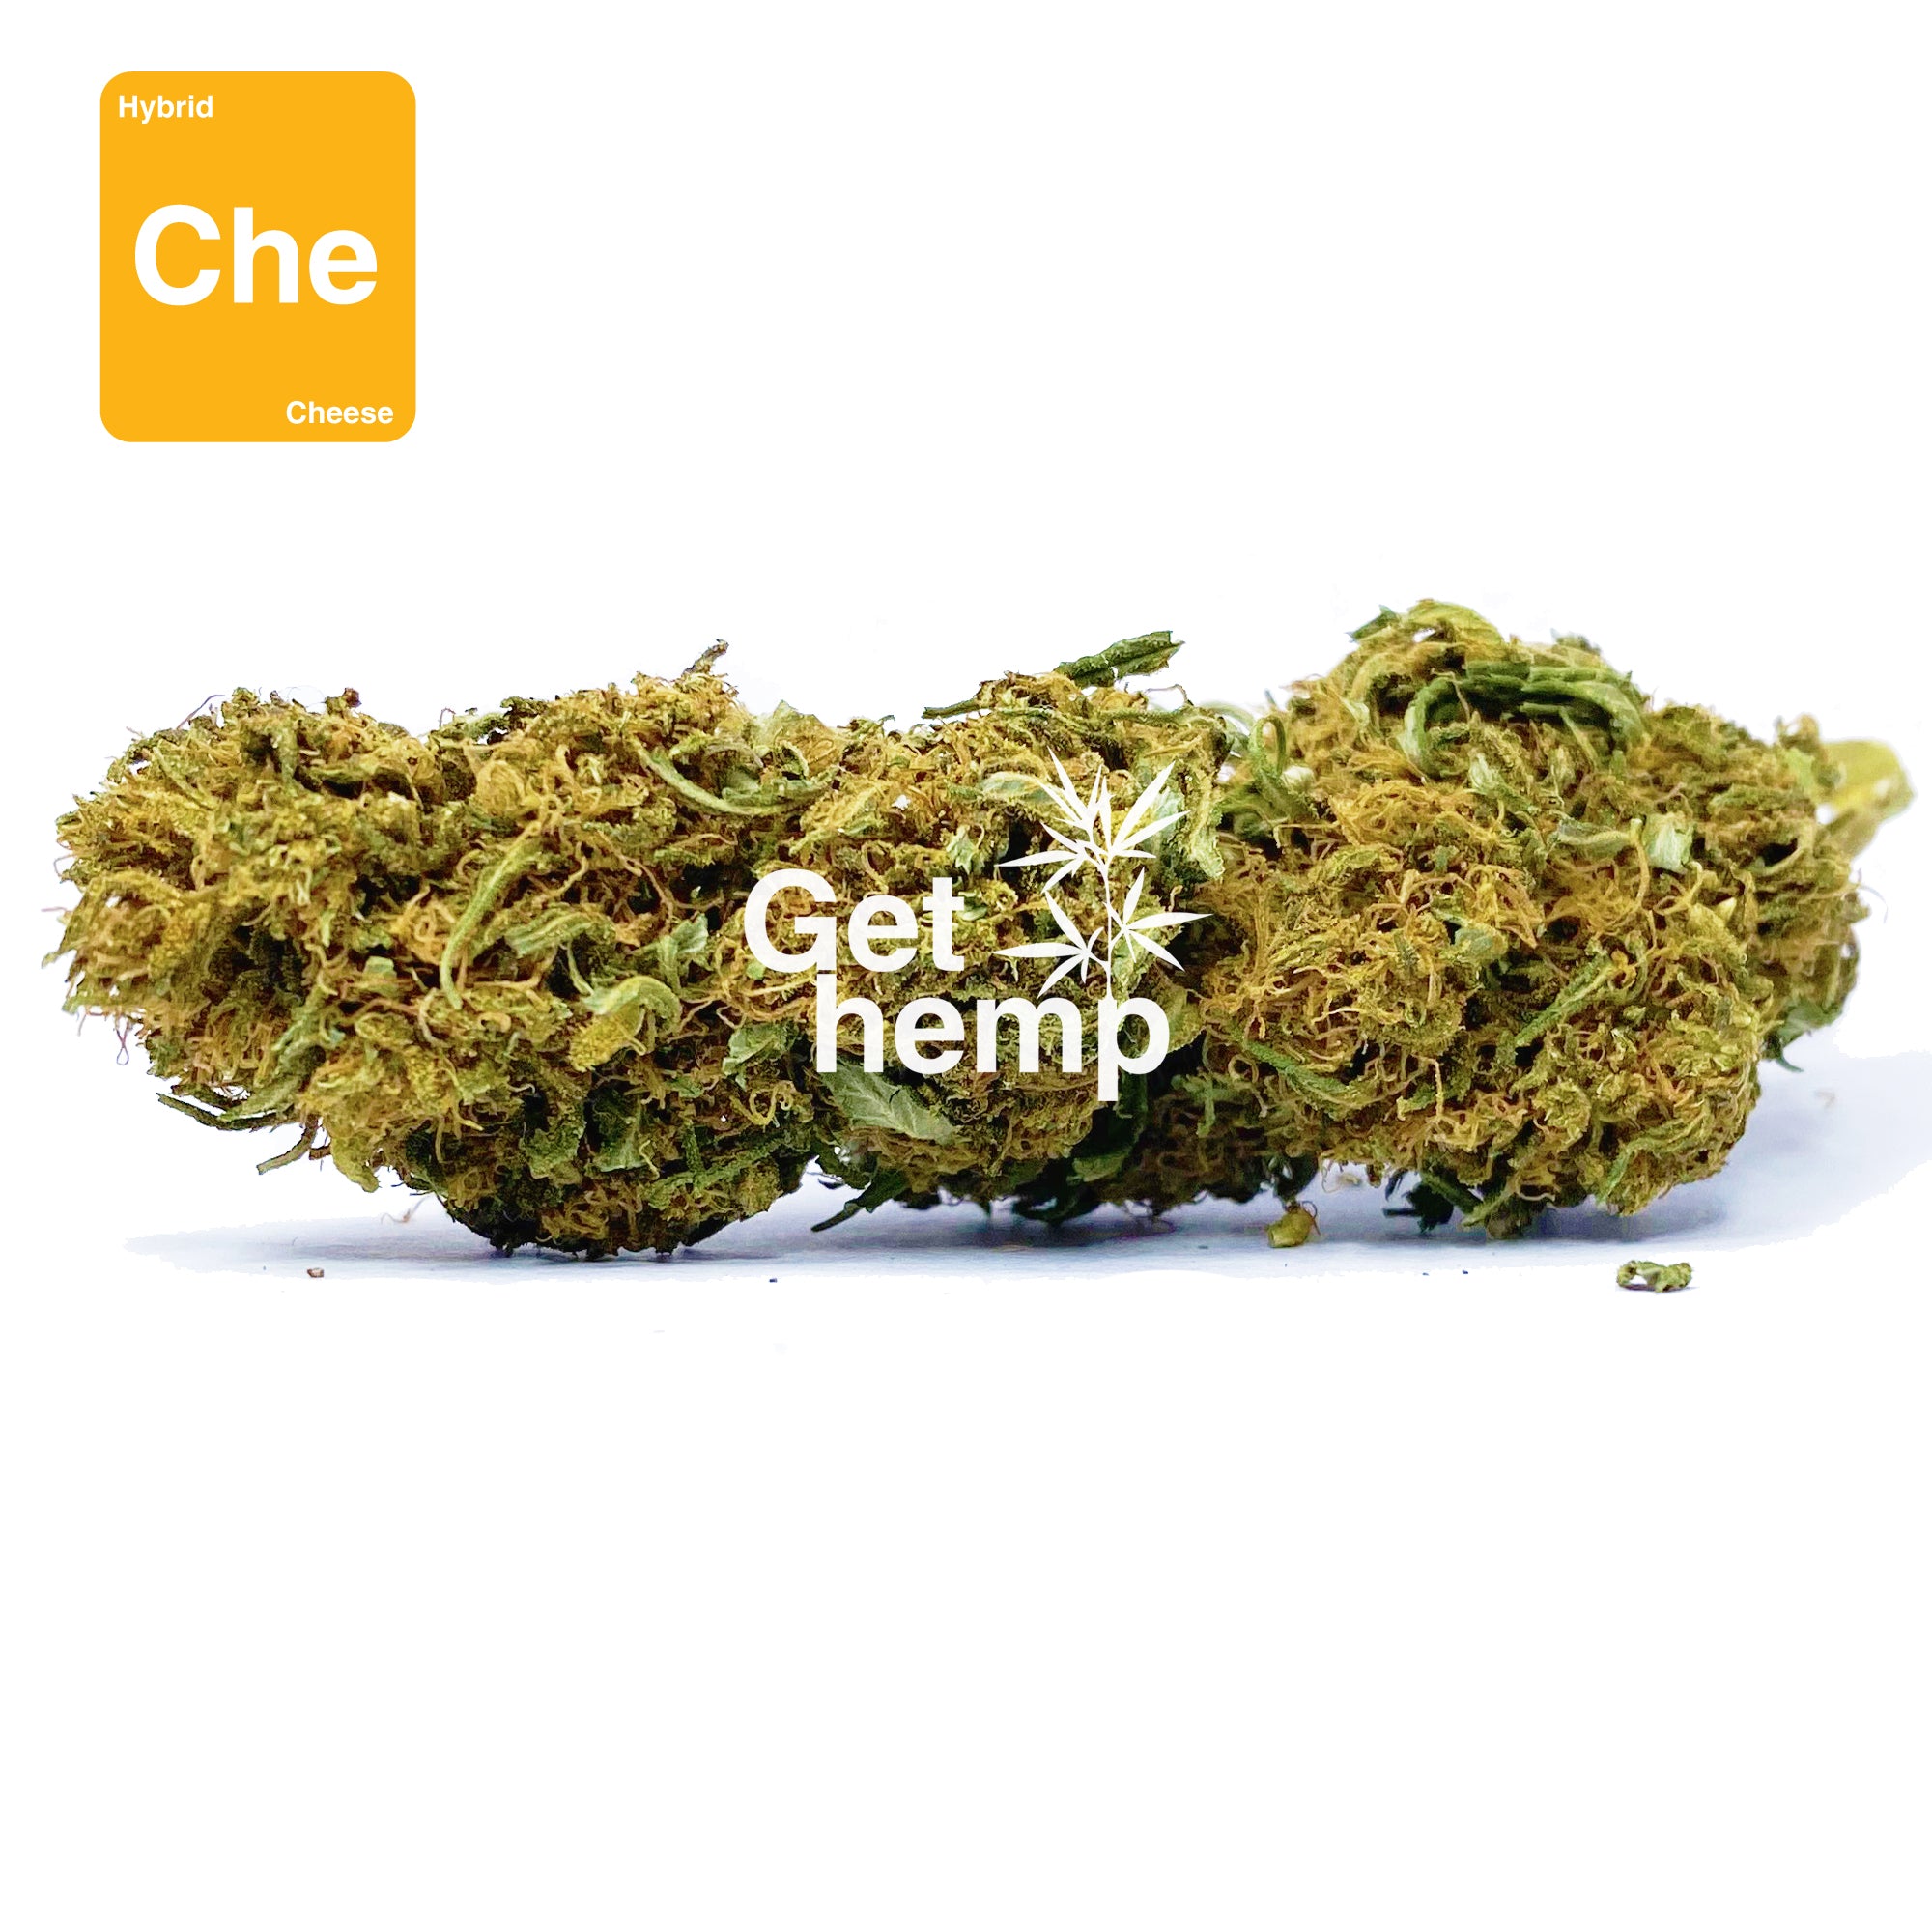 "Cheese" CBD Hemp Flowers (CBD 18% Max) - Gethemp